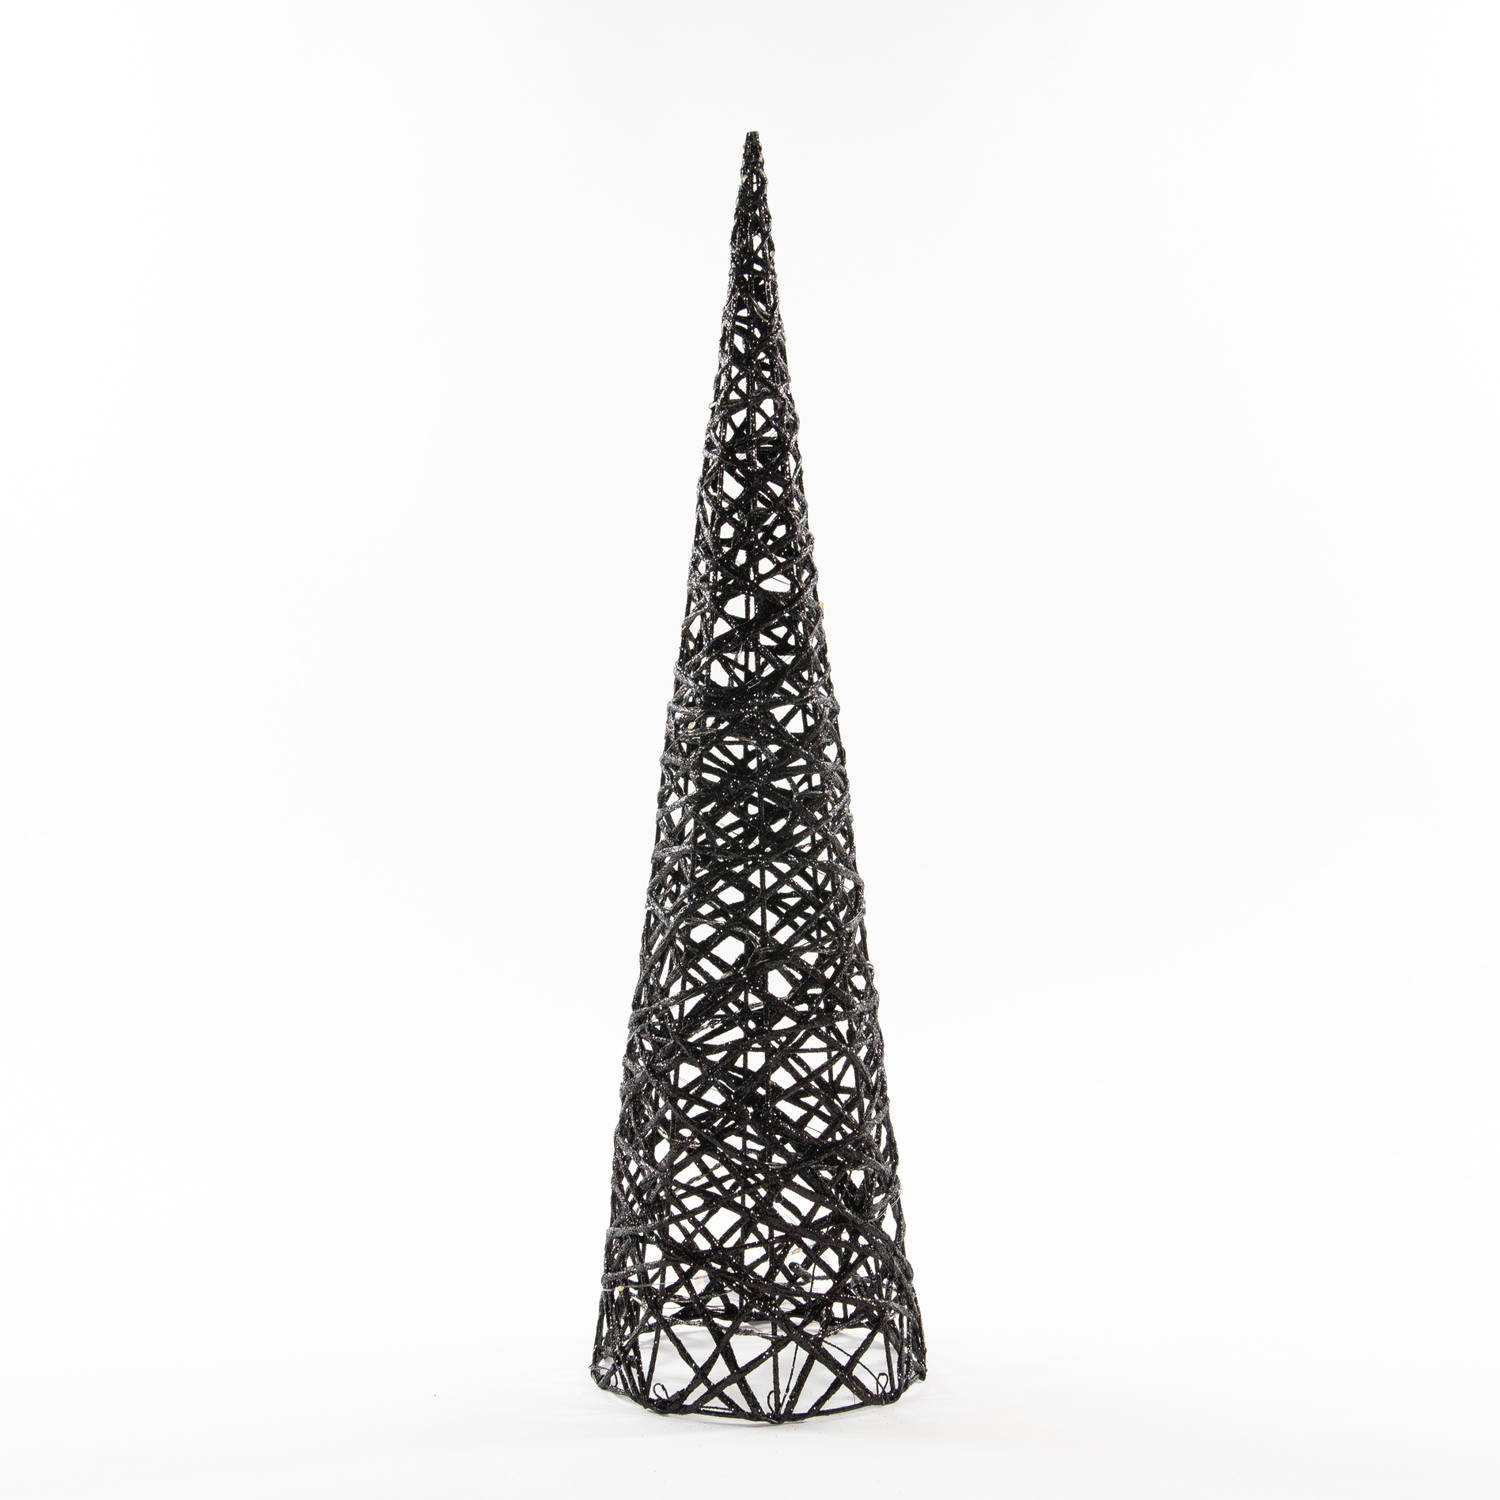 Anna Collection LED piramide kerstboom H60 cm zwart kunststof kerstverlichting figuur